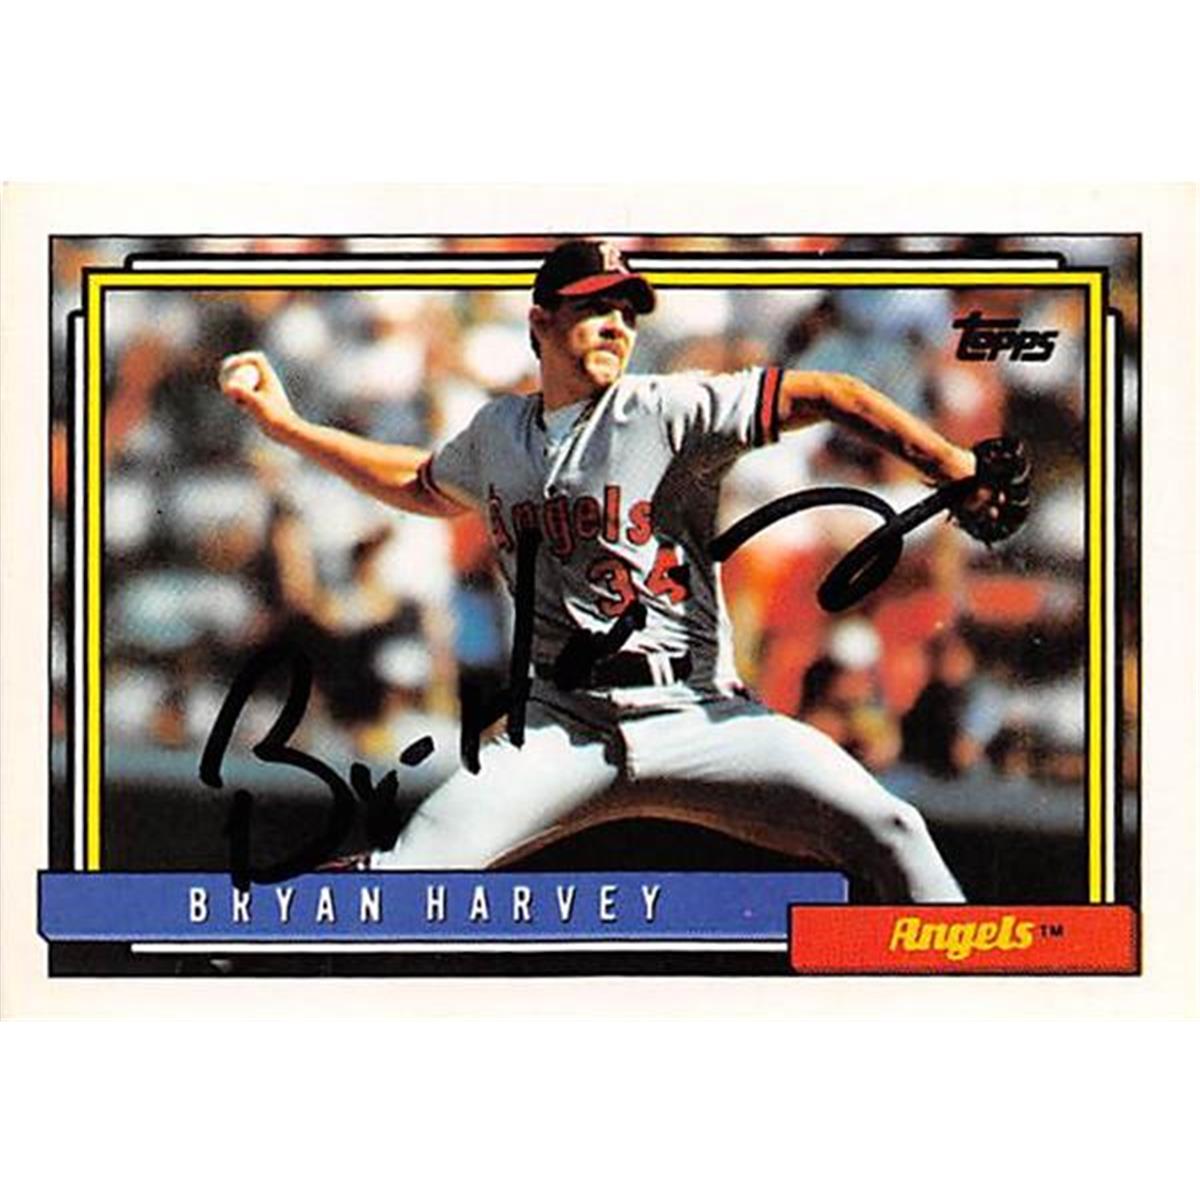 Autograph Warehouse 365866 Bryan Harvey Autographed Baseball Card - 1992 Topps-568